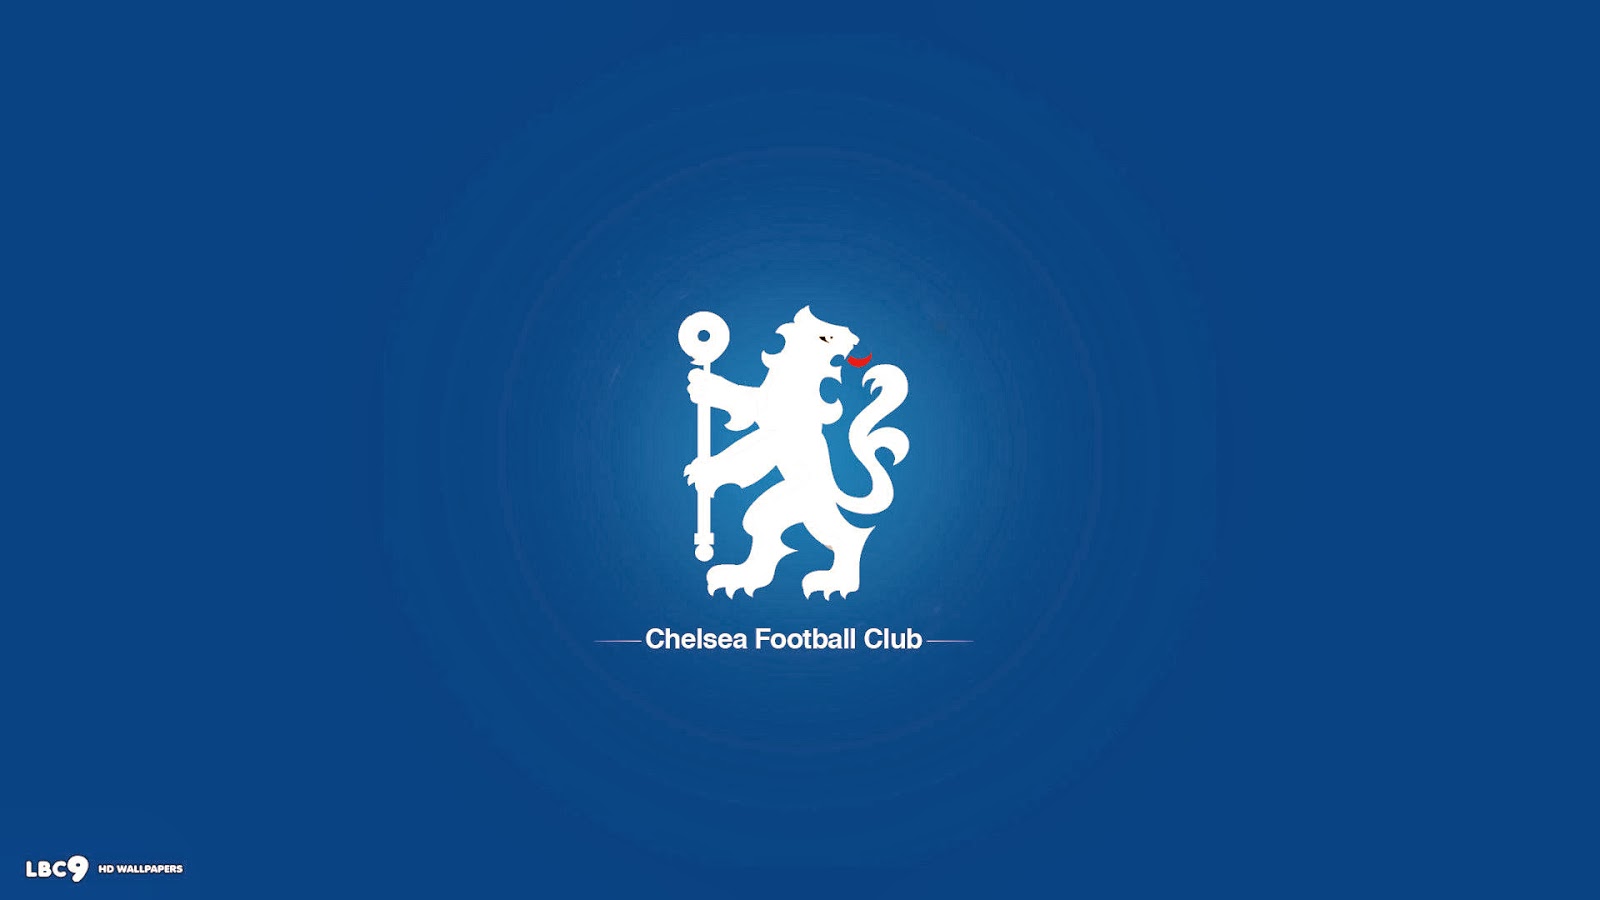 Football: Chelsea Football Club HD Wallpapers